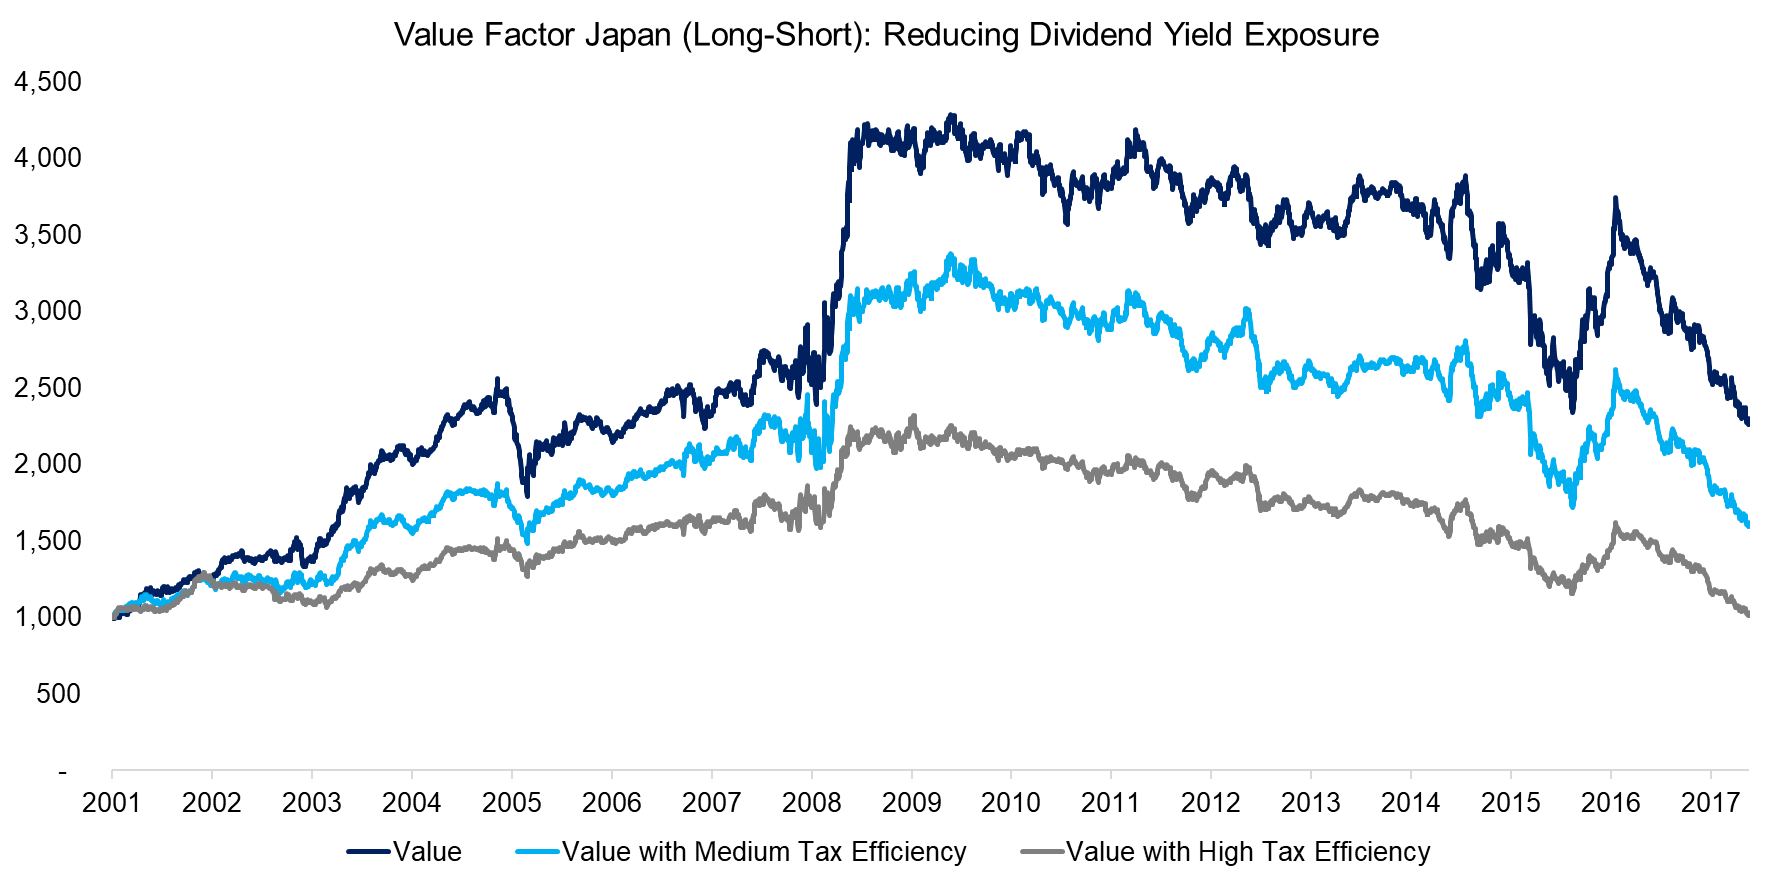 Value Factor Japan (Long-Short) Reducing Dividend Yield Exposure